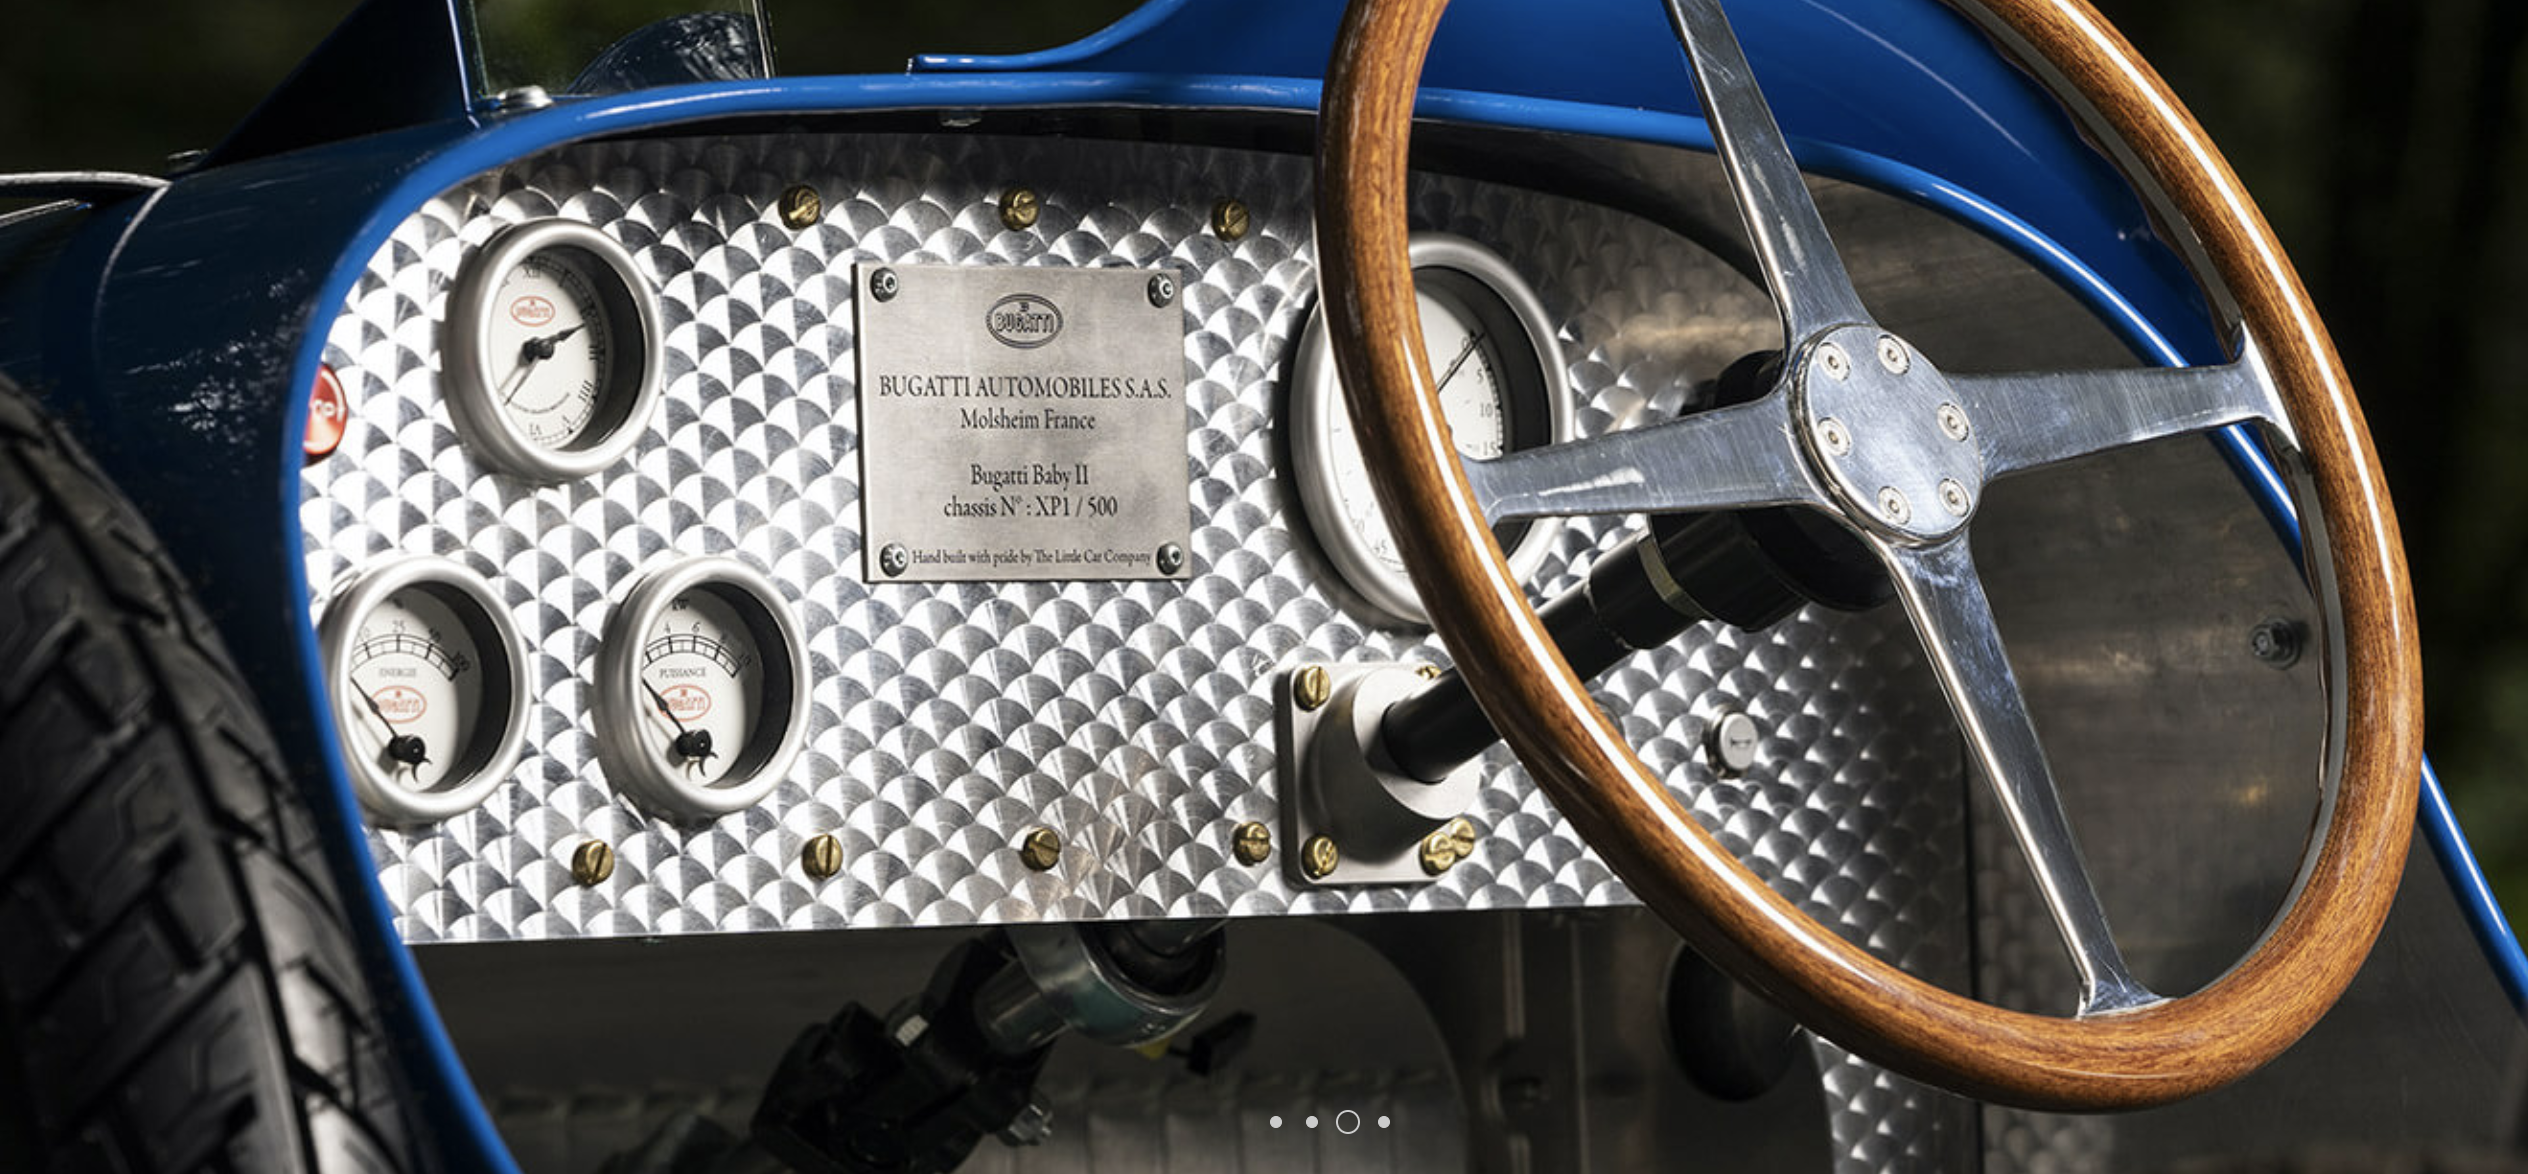 Bugatti clásico